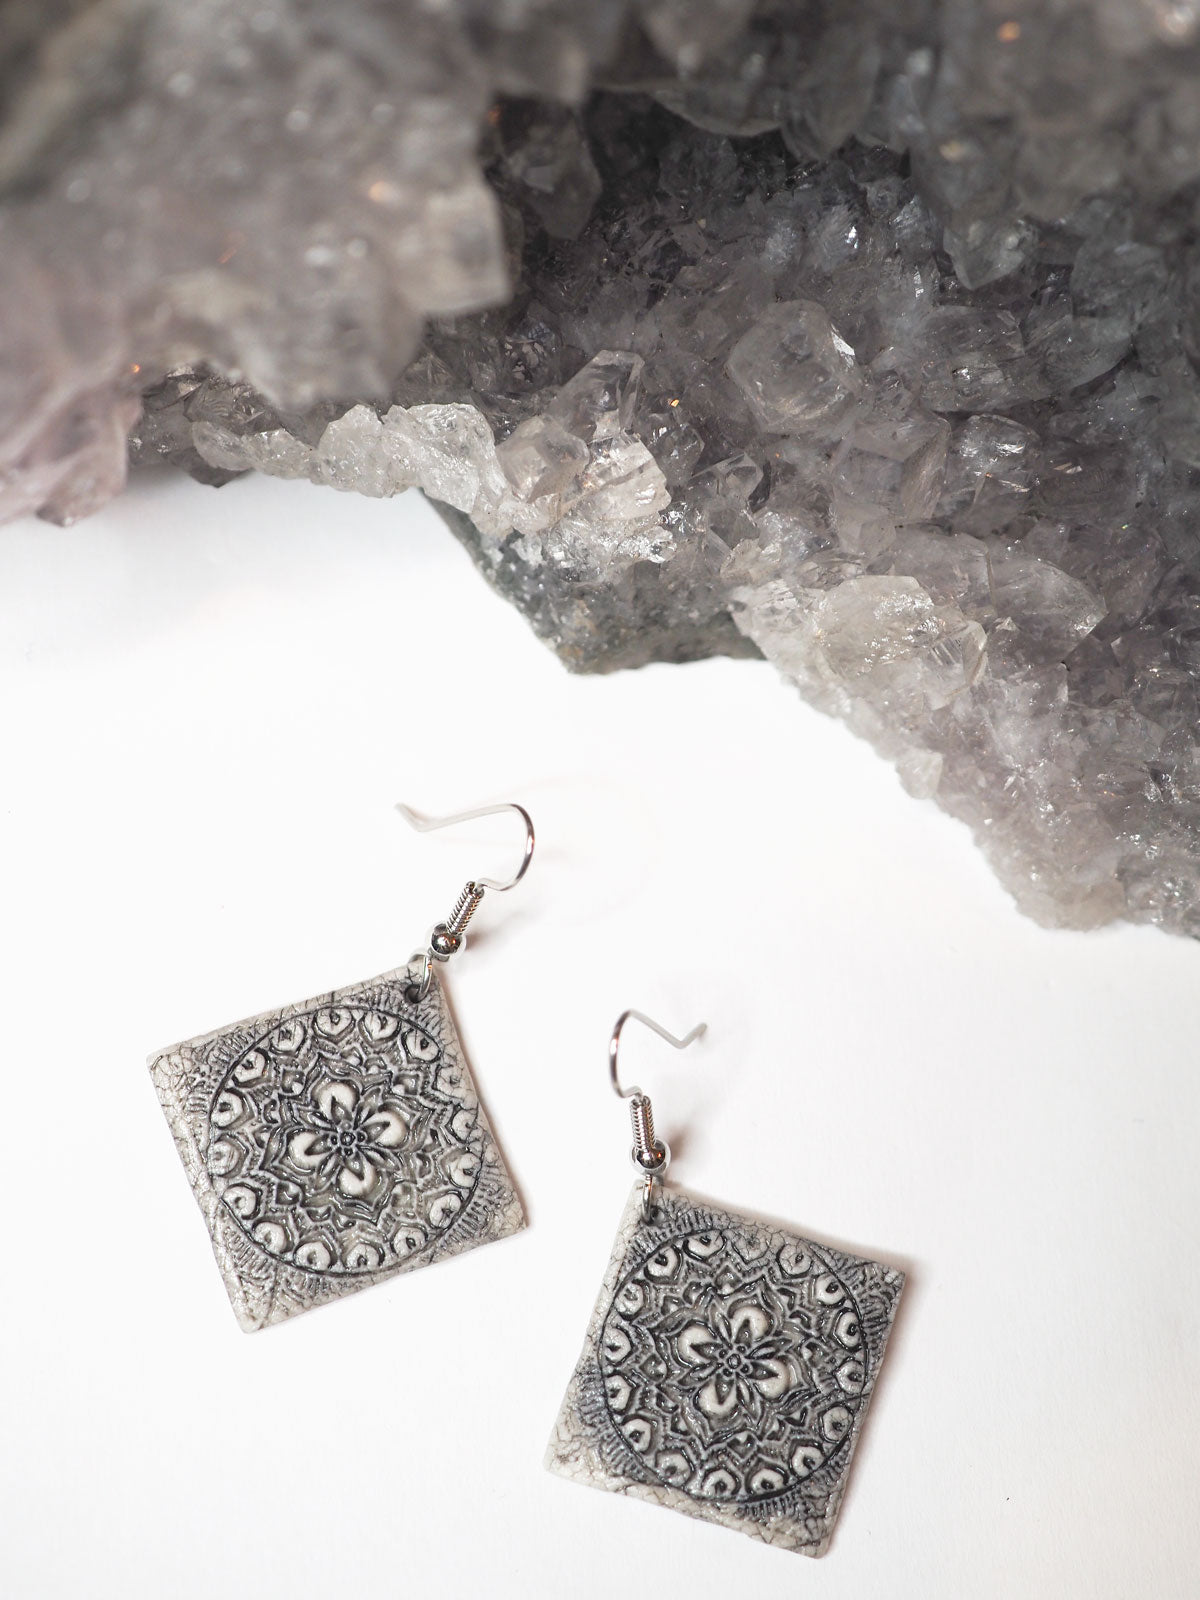 Black and white mandala, diamond-shaped porcelain earrings